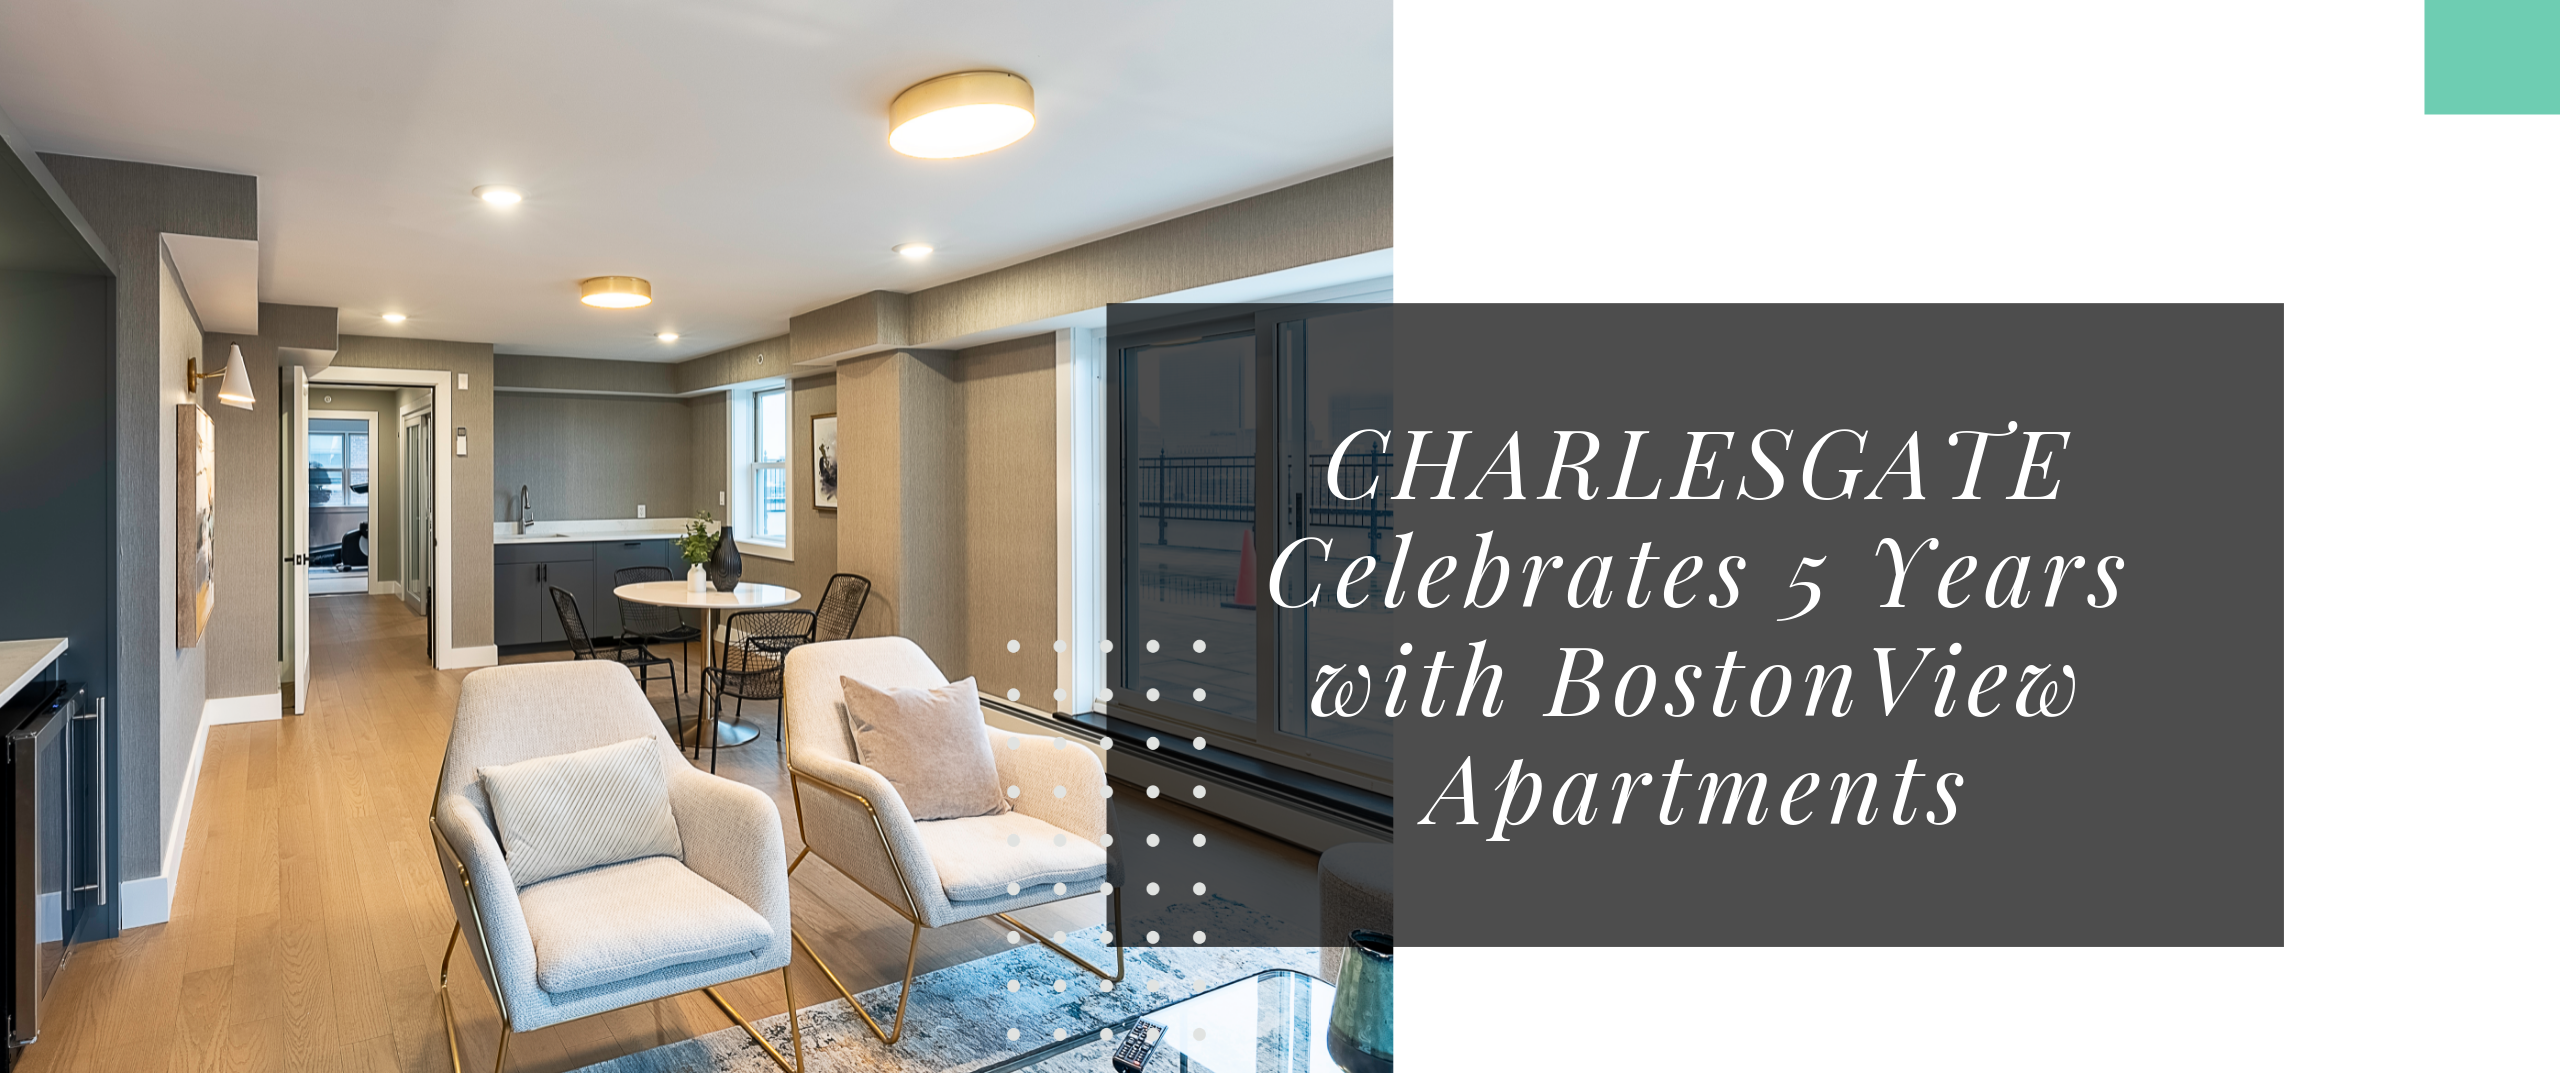 CHARLESGATE Celebrates 5 Year Anniversary with BostonView Apartments